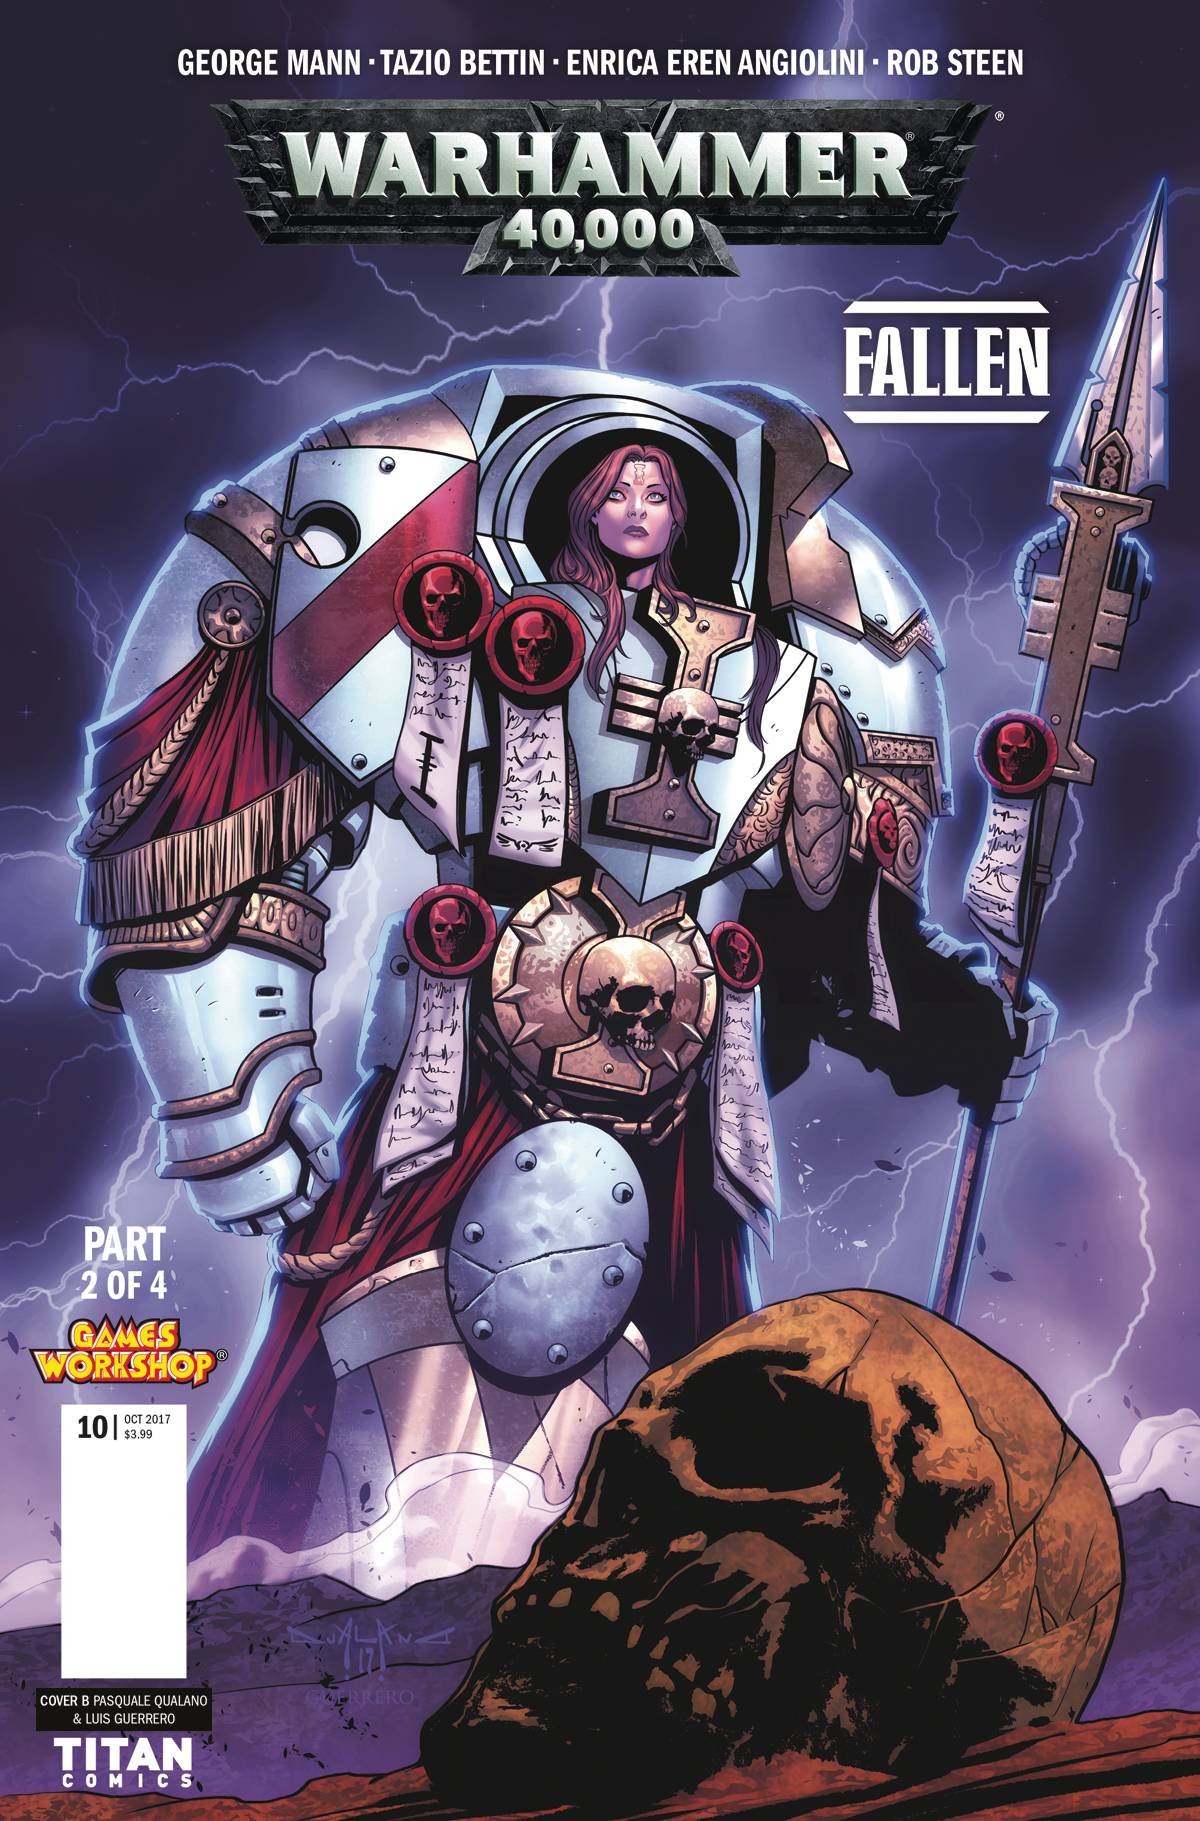 Warhammer 40000 Fallen #2 Cover B Qualano